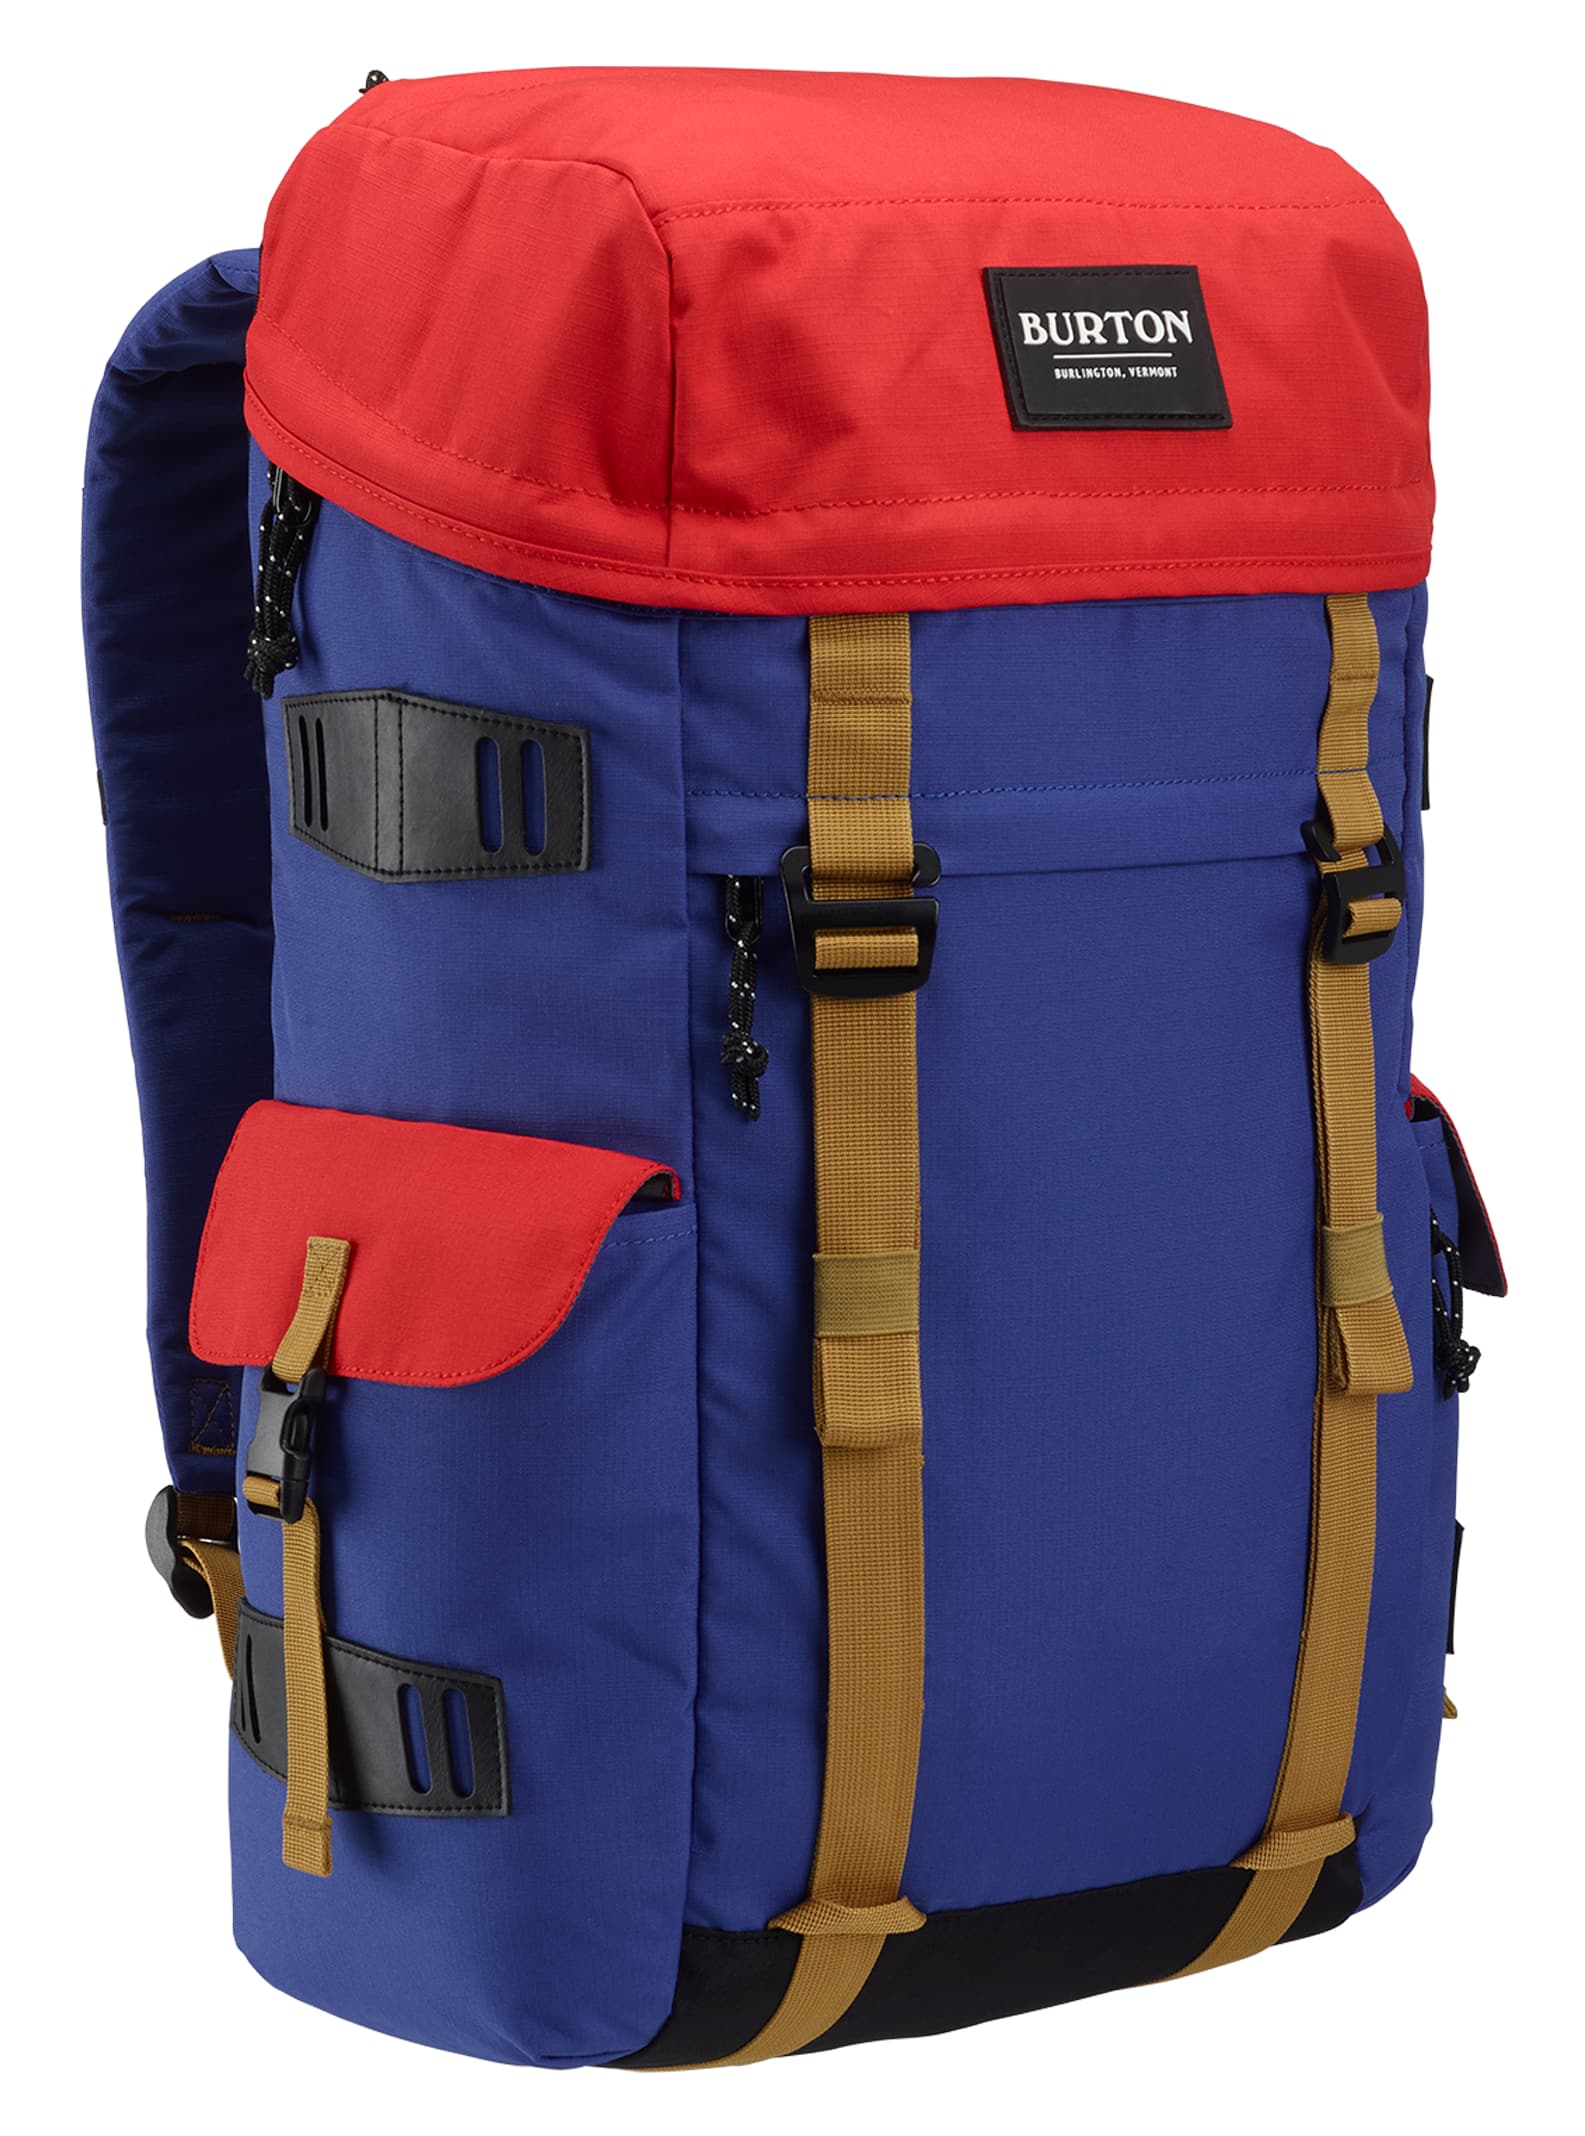 Burton Annex 28L Backpack | Burton.com Winter 2020 GB